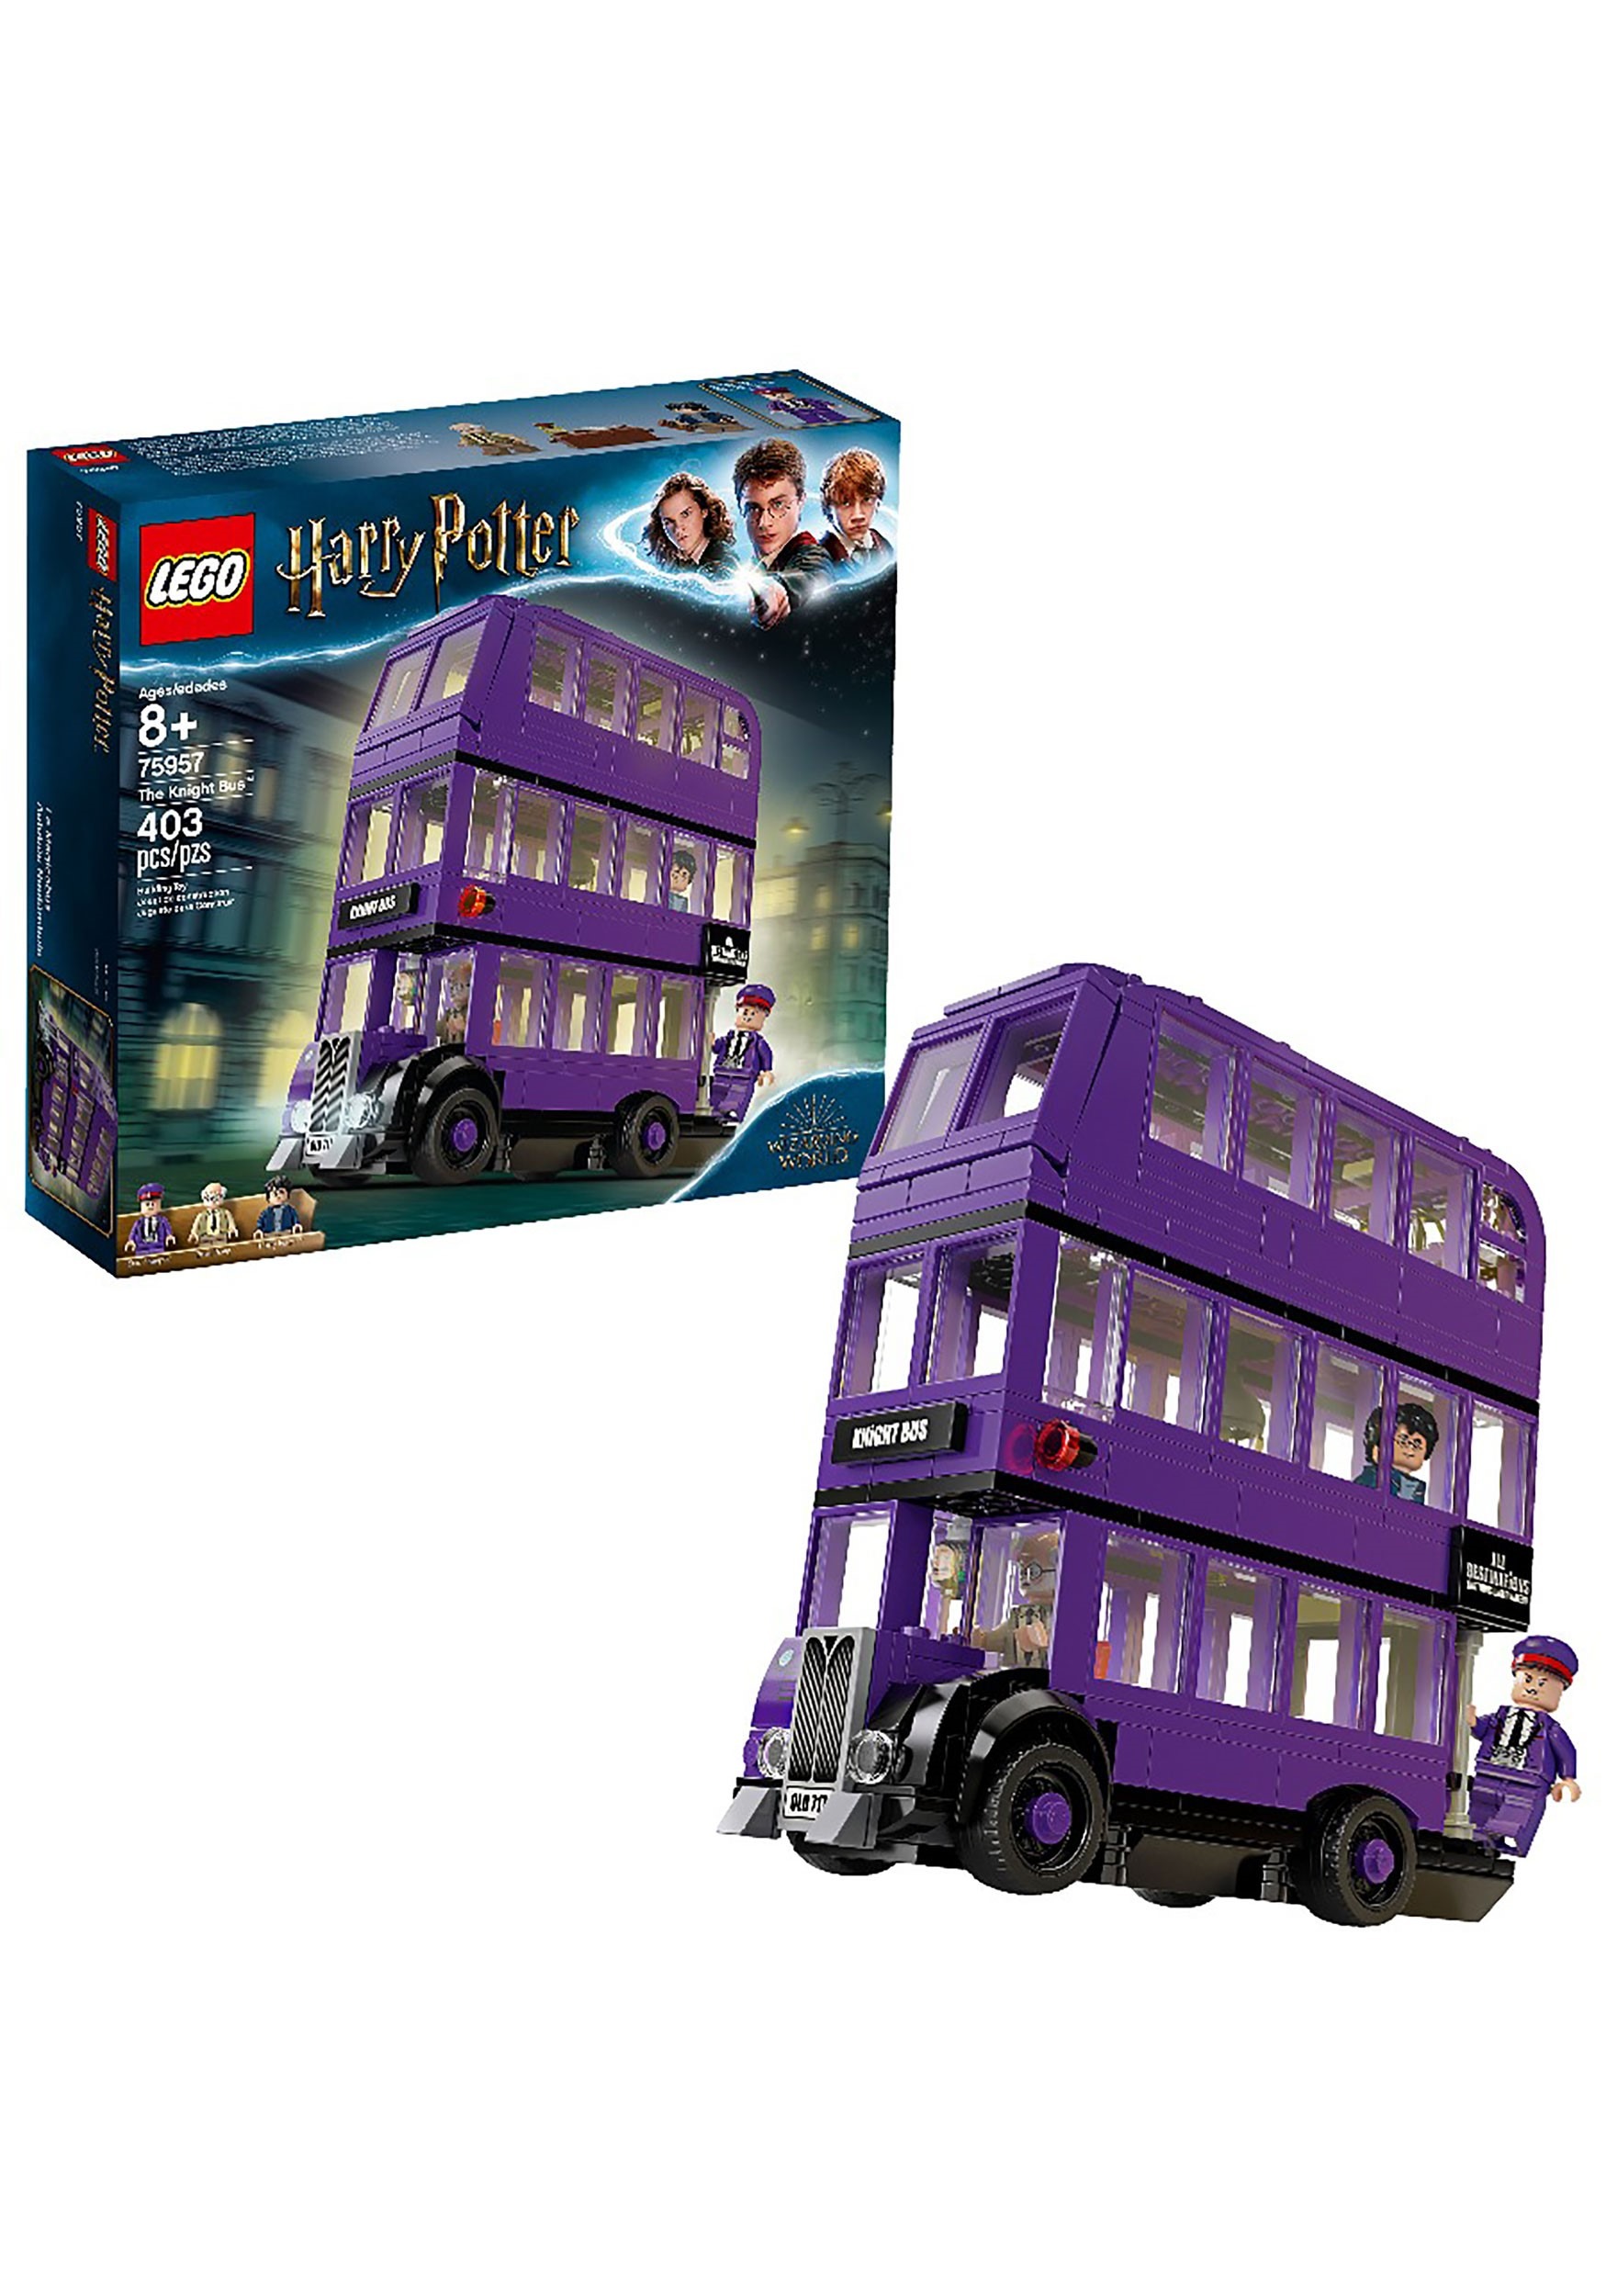 LEGO Harry Potter The Knight Bus Set